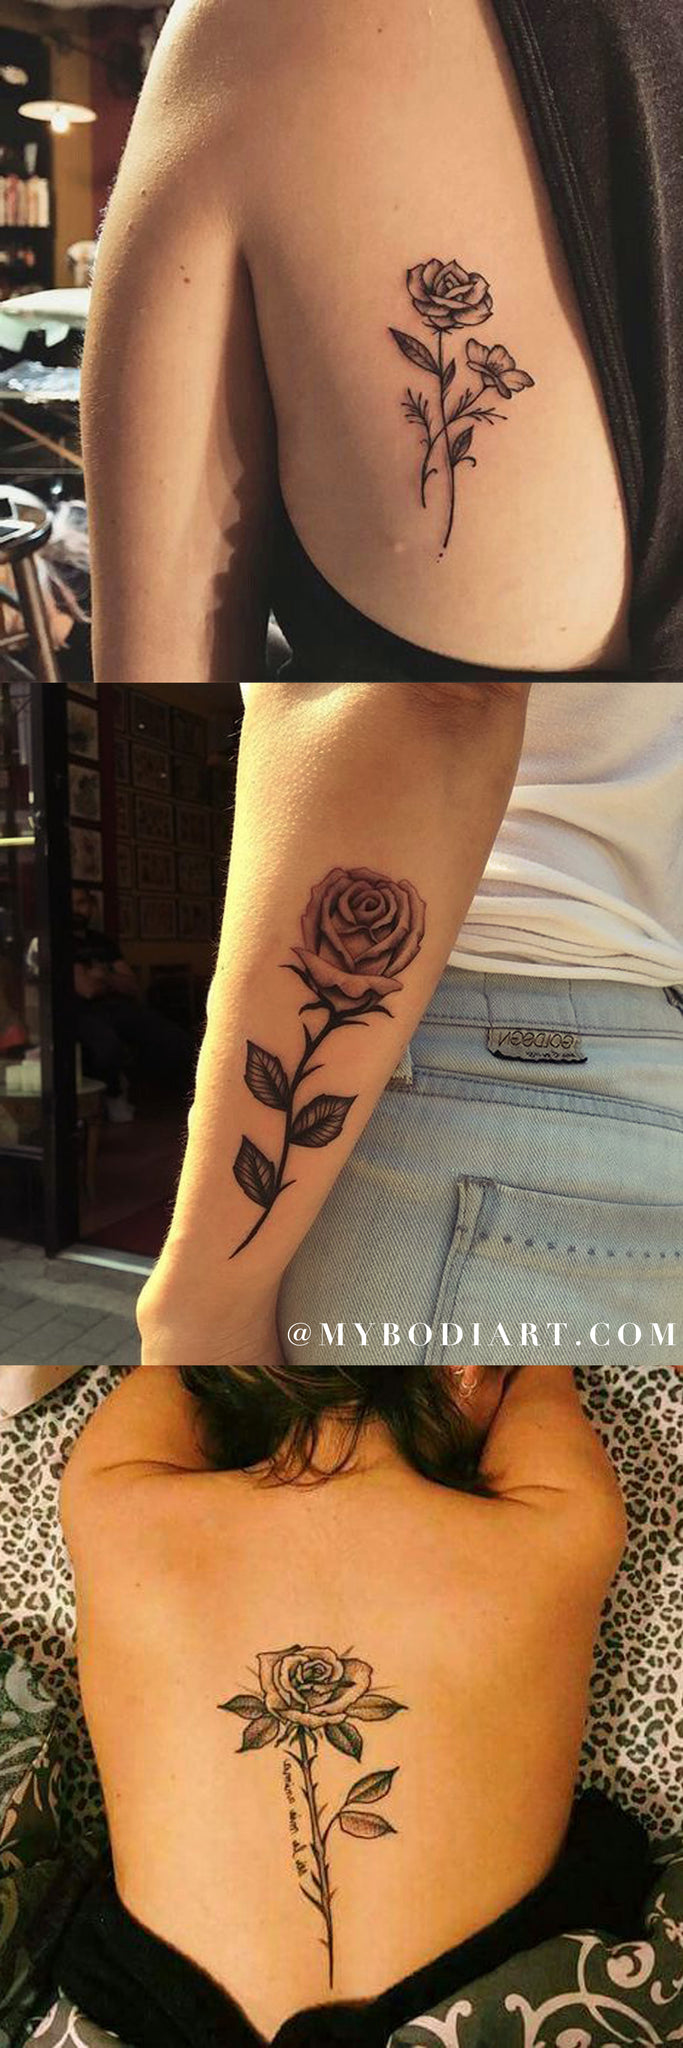 Beautiful Single Rose Tattoo Ideas for Women - Black Floral Flower Rib Back Arm Tattoos - ideas únicas del tatuaje de la rosa negra para las mujeres - www.MyBodiArt.com